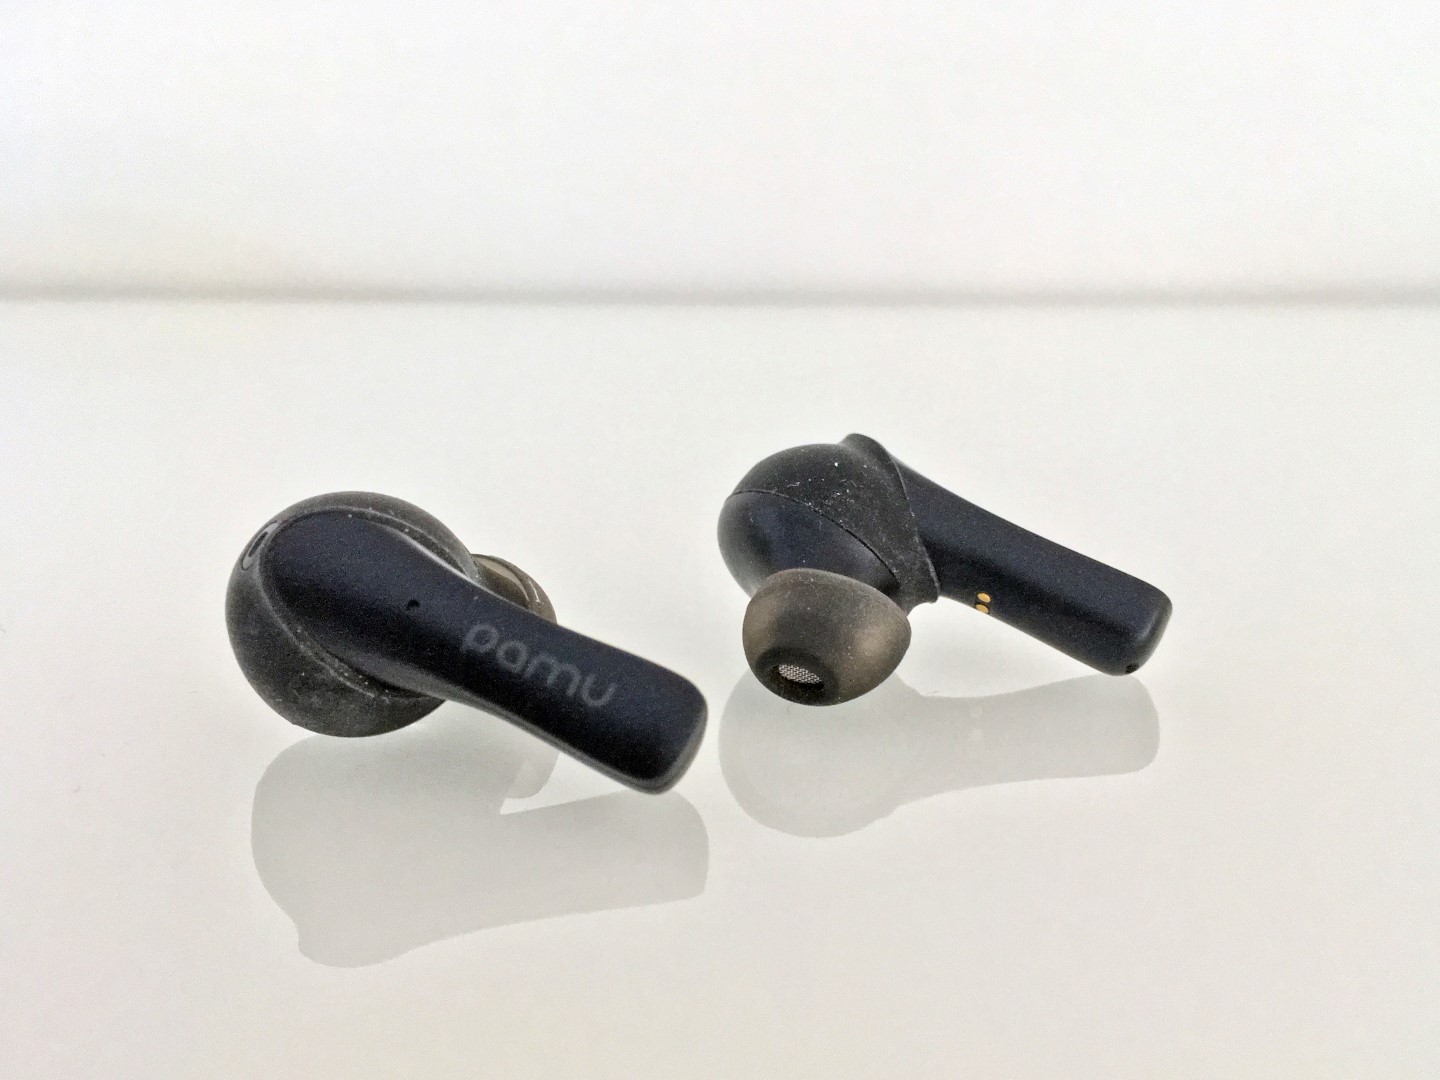 Pamu Slide - Kabellose Bluetooth Kopfhörer im Test